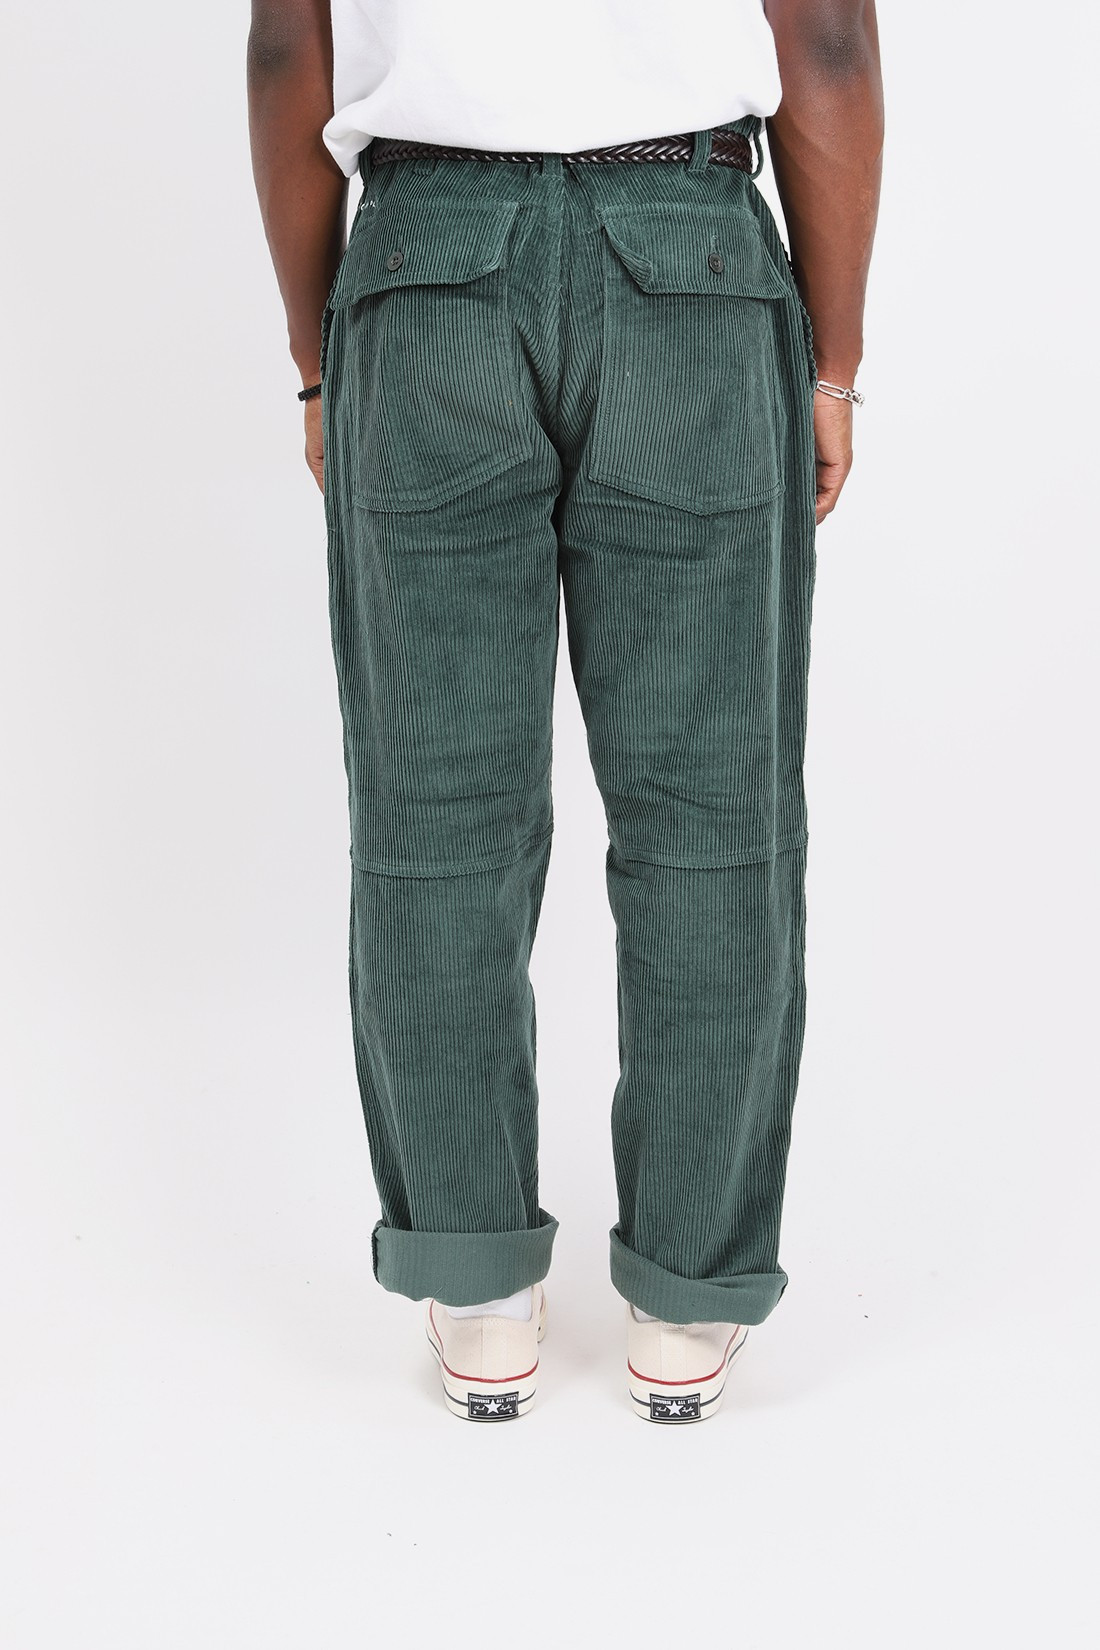 POP TRADING COMPANY / Phatigue farm pants Bistro green